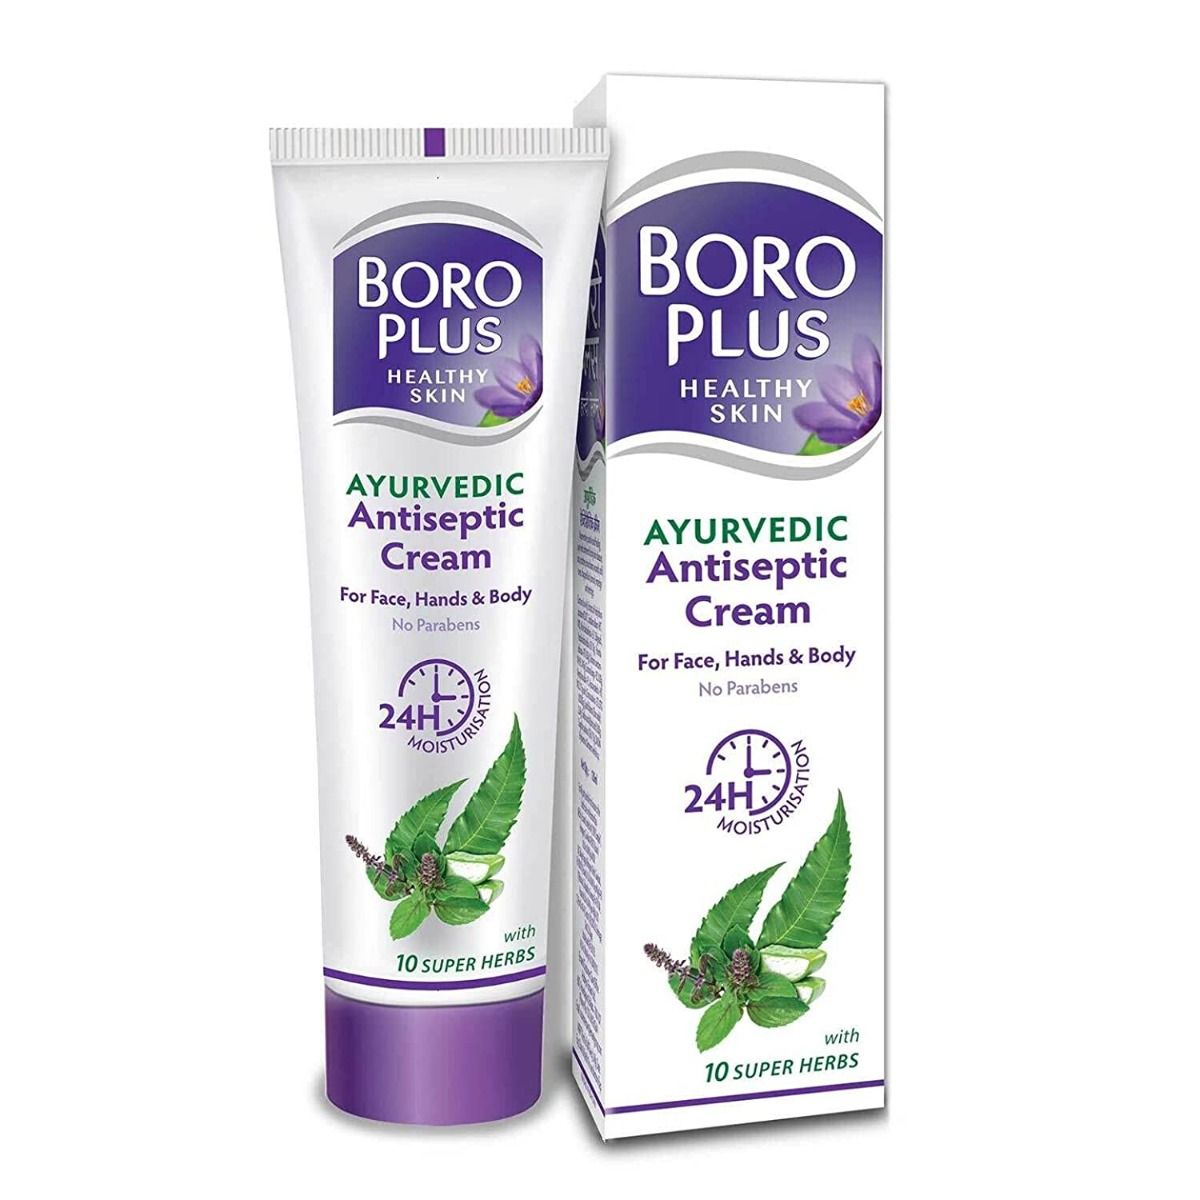 Buy BoroPlus Ayurvedic Antiseptic Cream, 80 ml Online